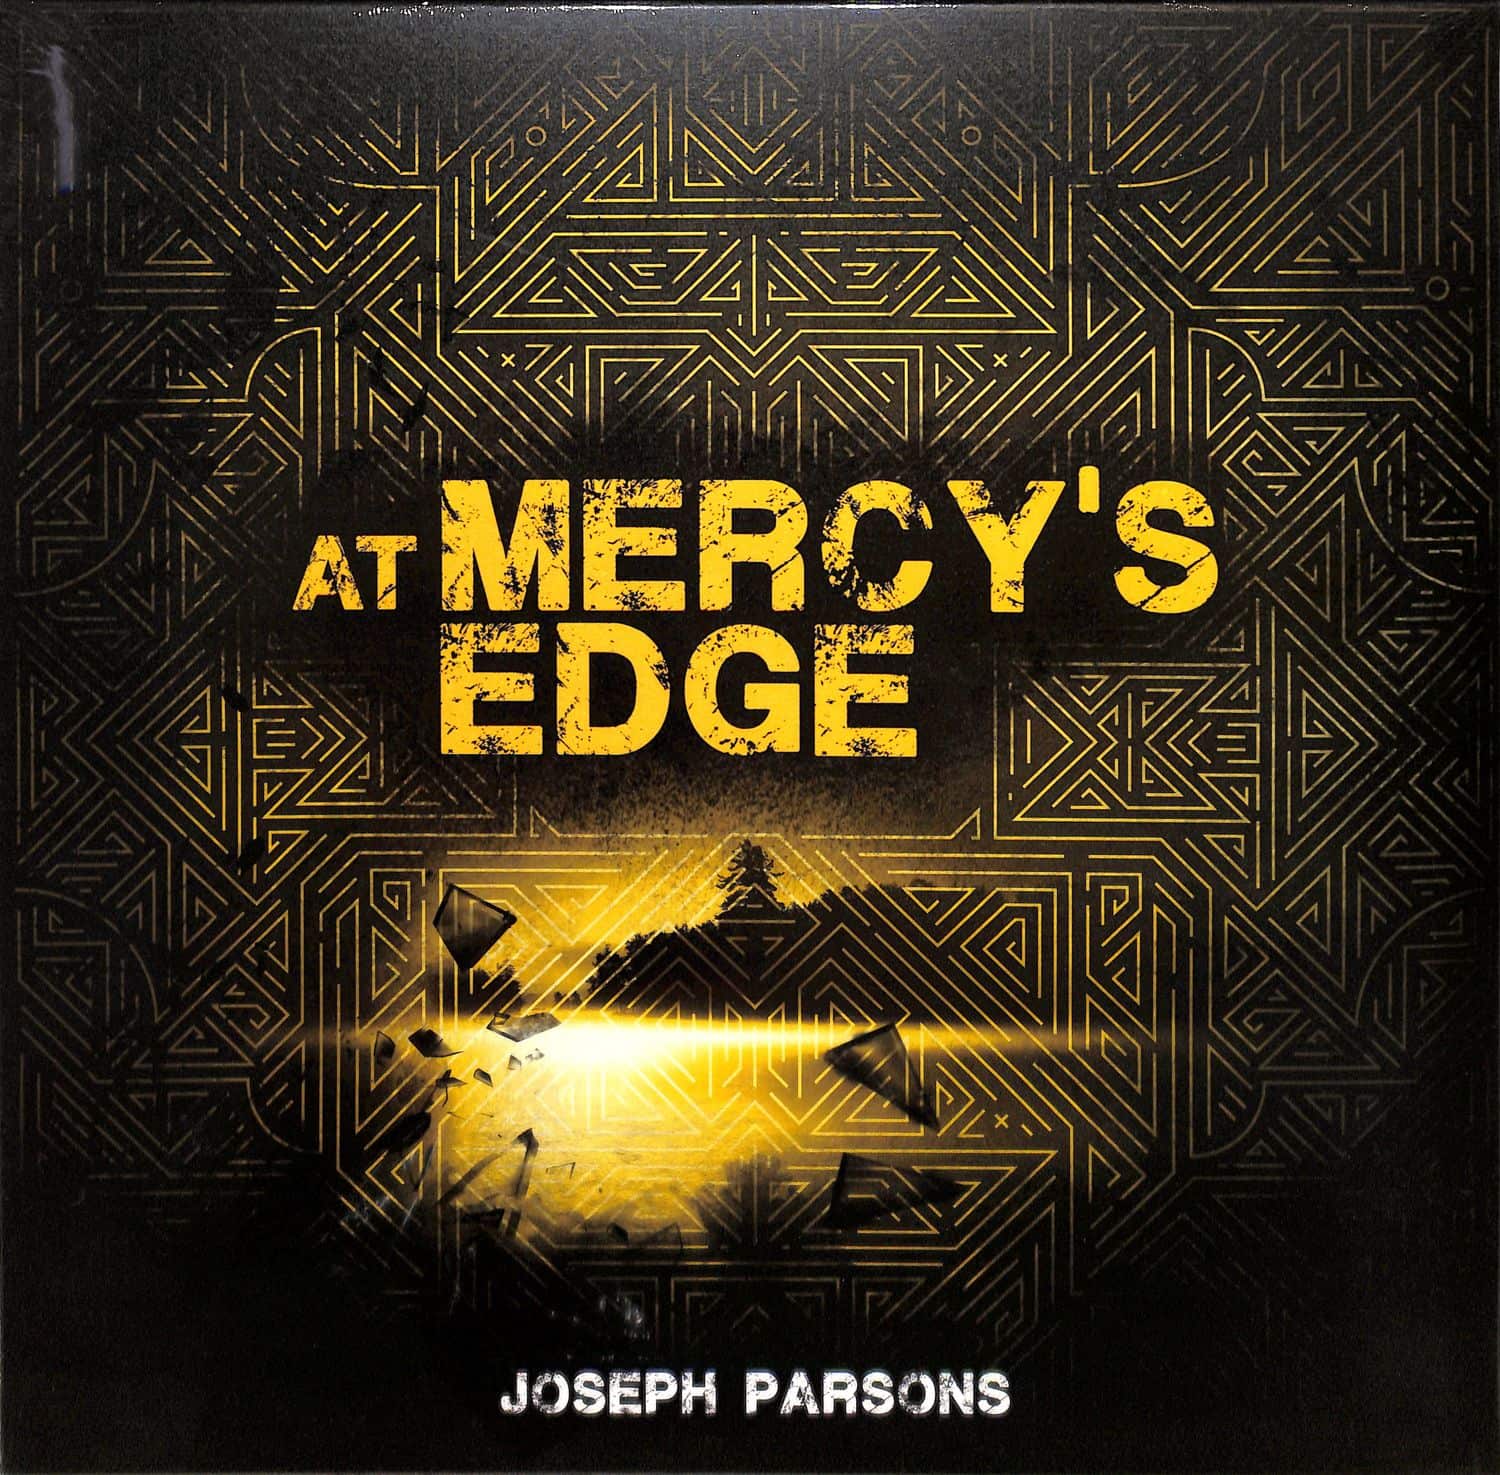 Joseph Parsons - AT MERCYS EDGE 